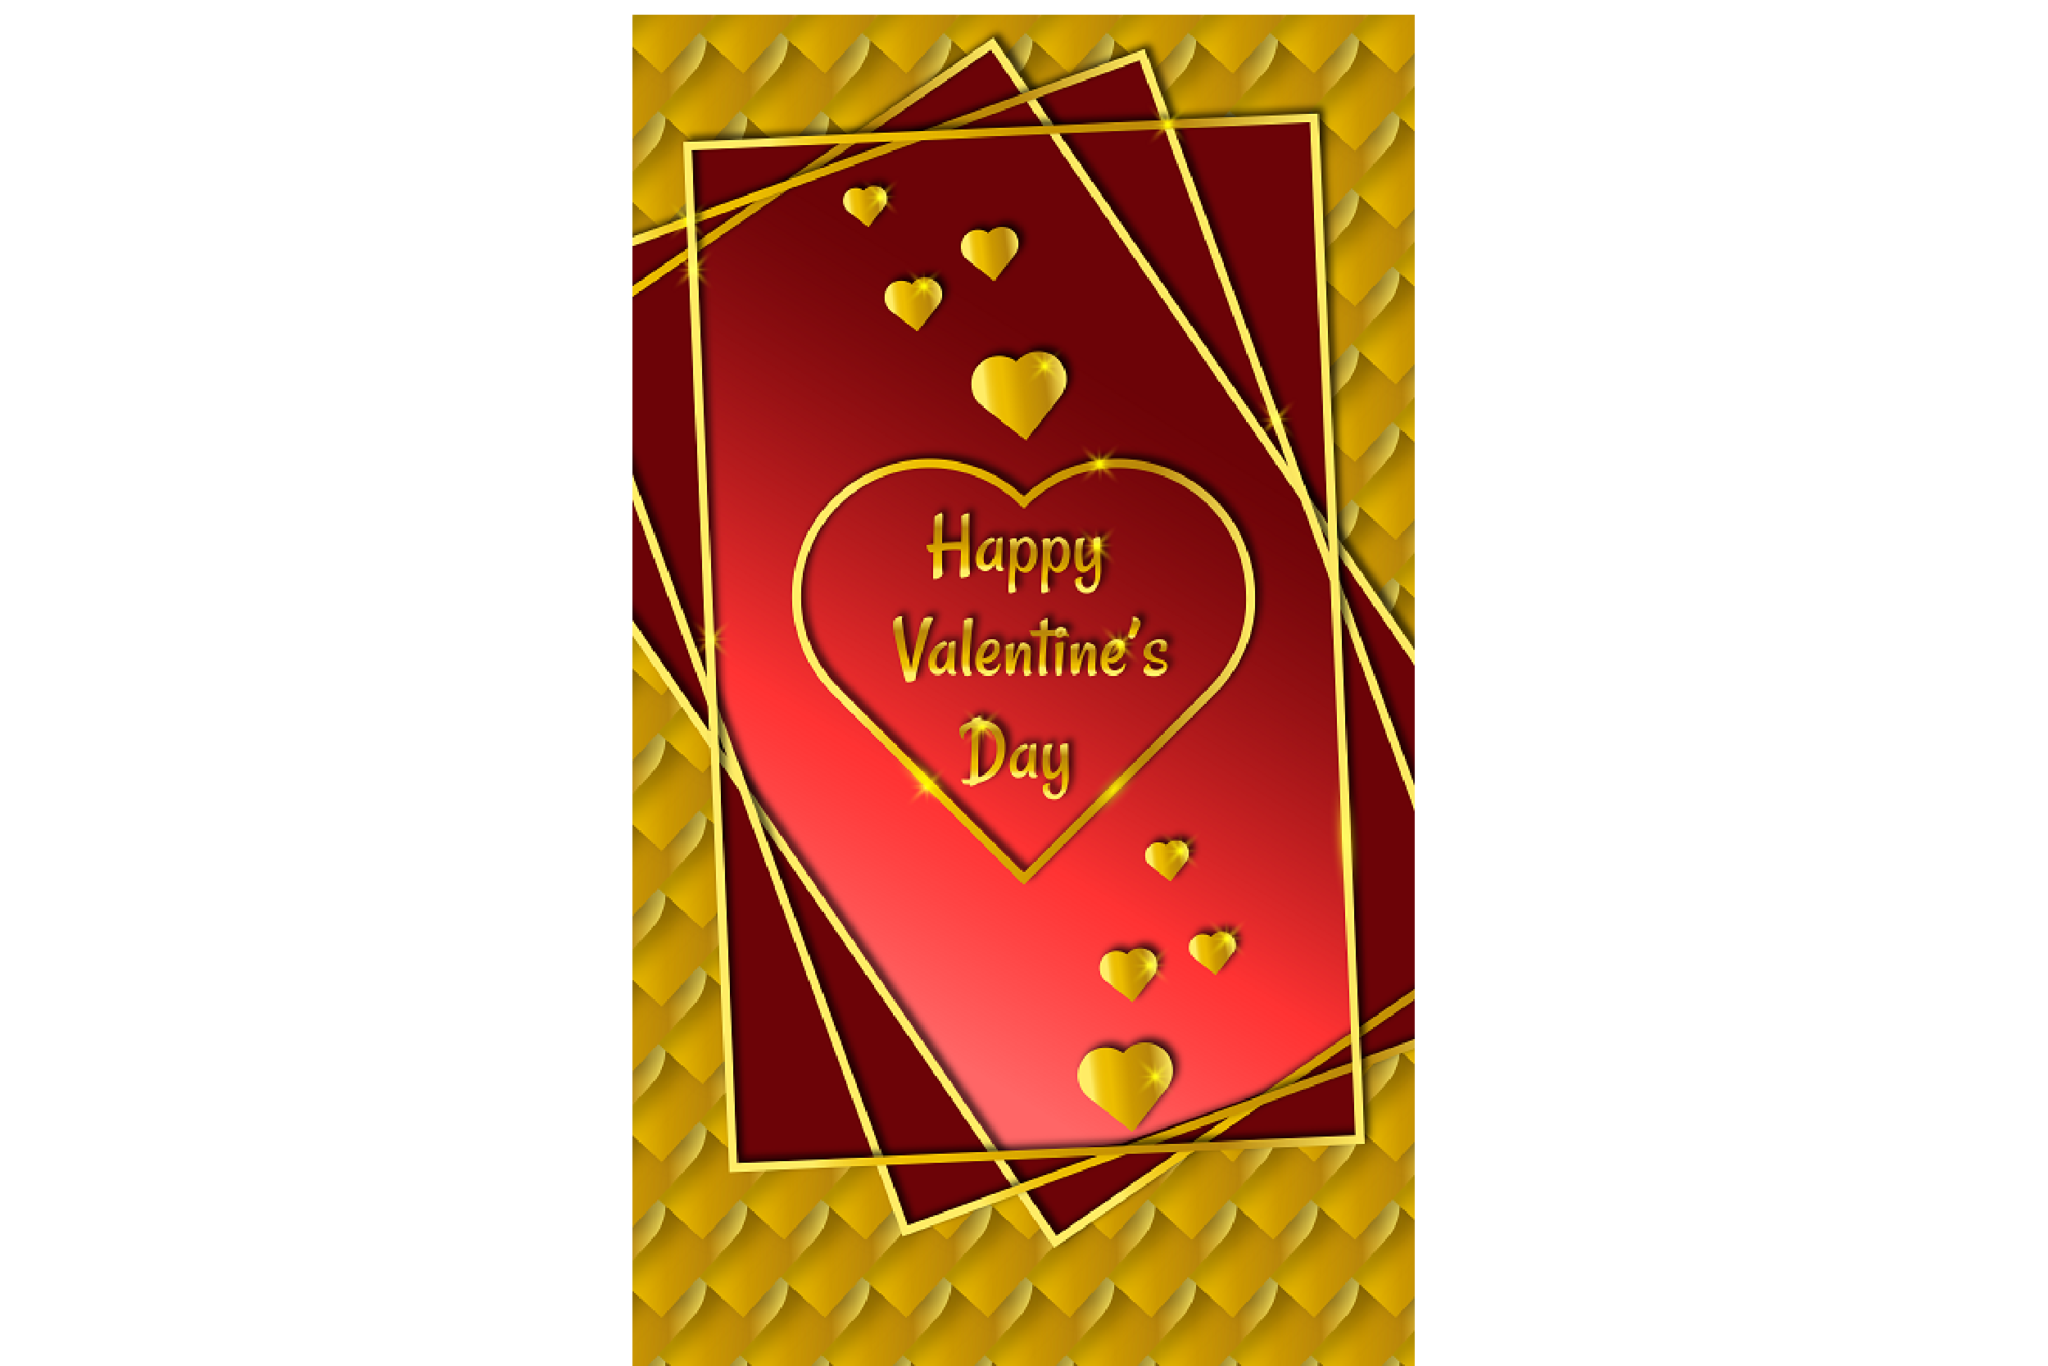 Valentines Day Card Design In Illustrator Sanpls Digital Illustrator